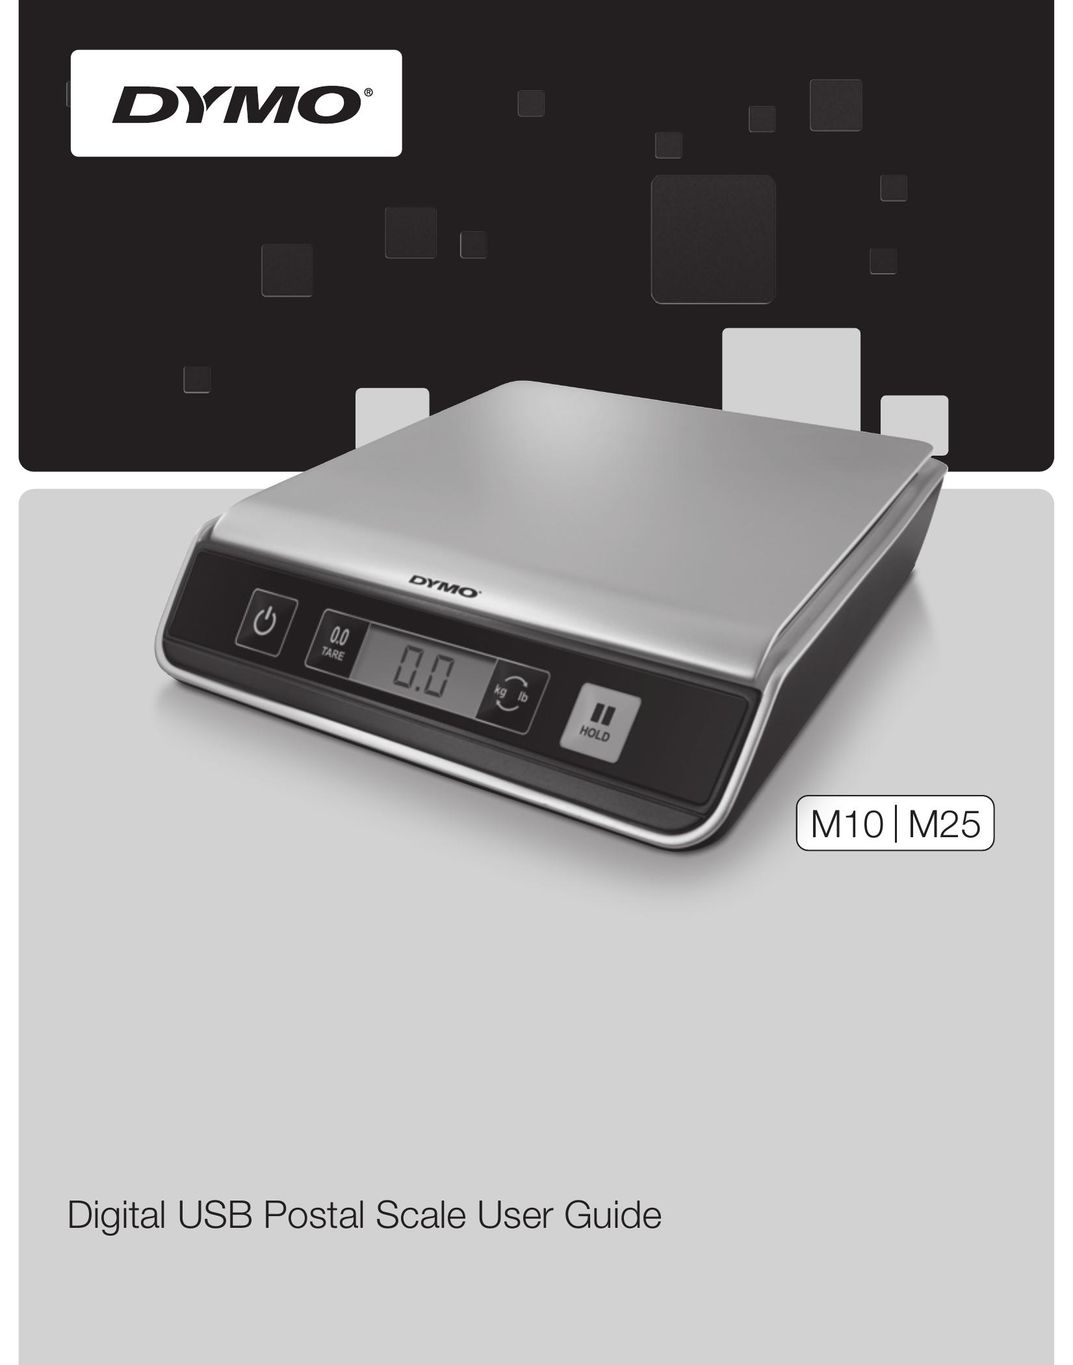 Dymo M10 Postal Equipment User Manual